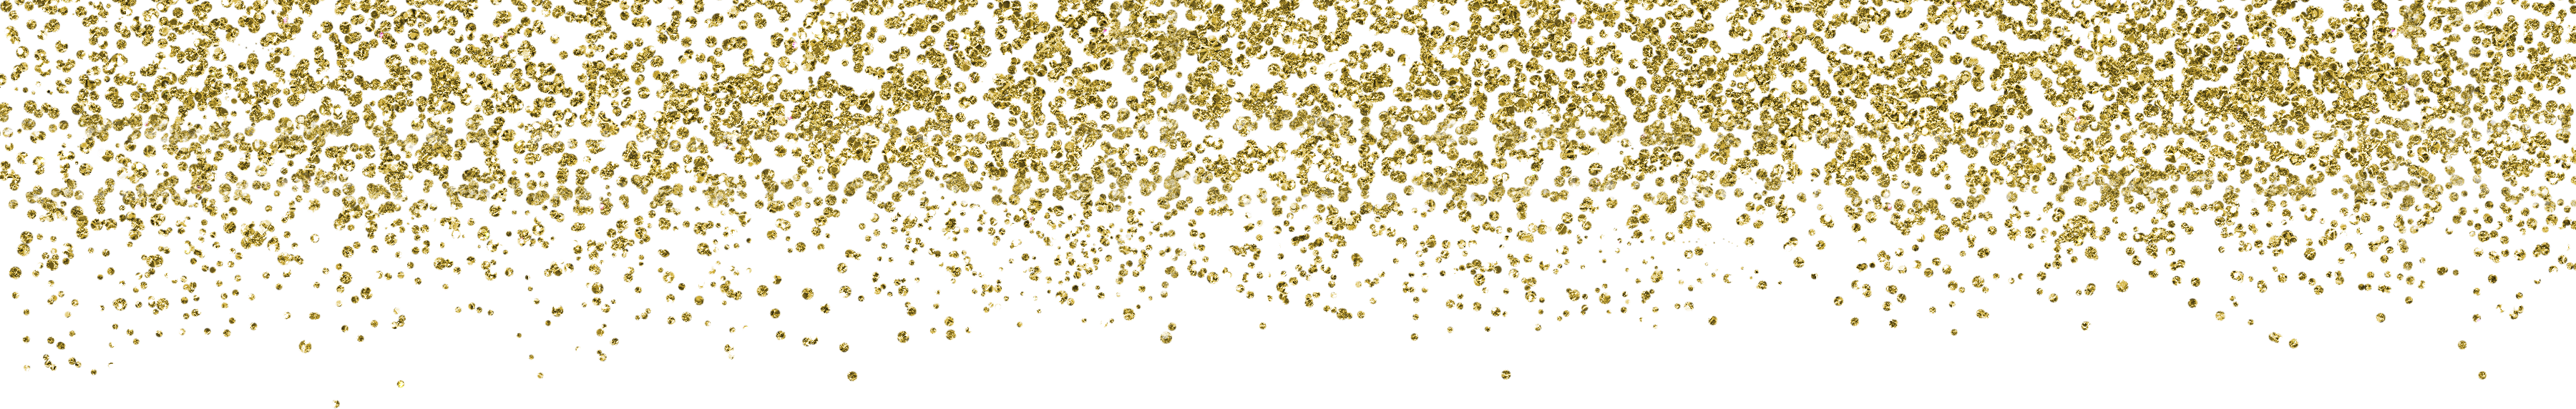 Glitter Gold Sparkle PNG Gambar berkualitas tinggi